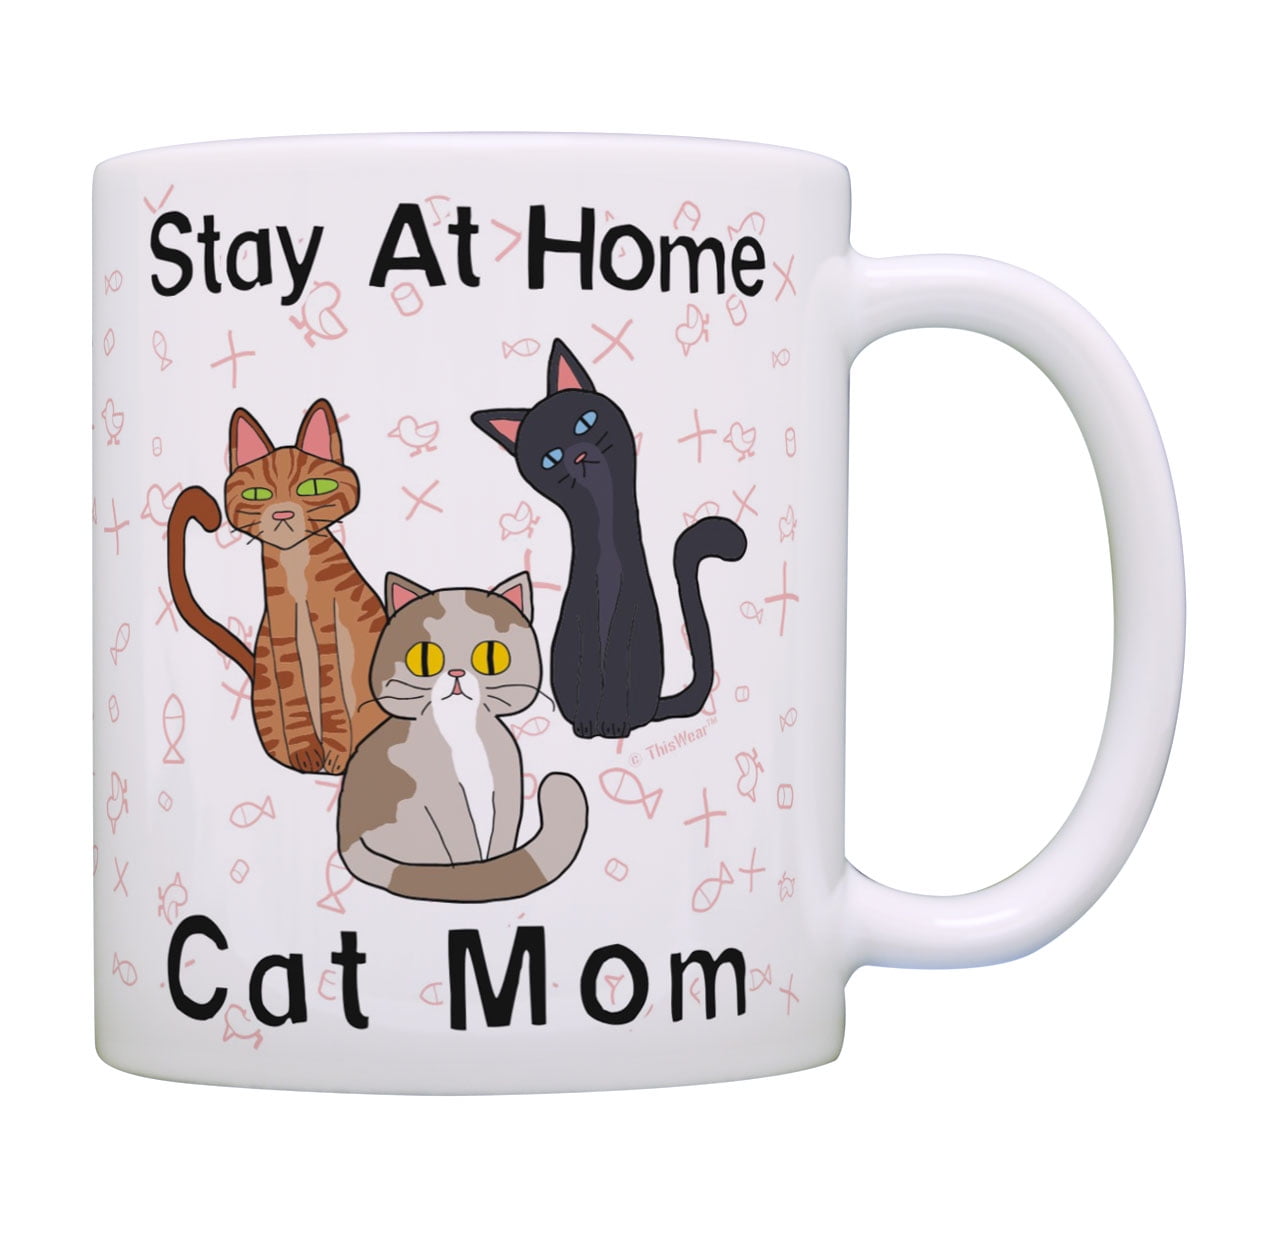 16 OZ Novelty Cat Cartoon Gift Mug Red Momugs TM Large White Ceramic Coffee Cup